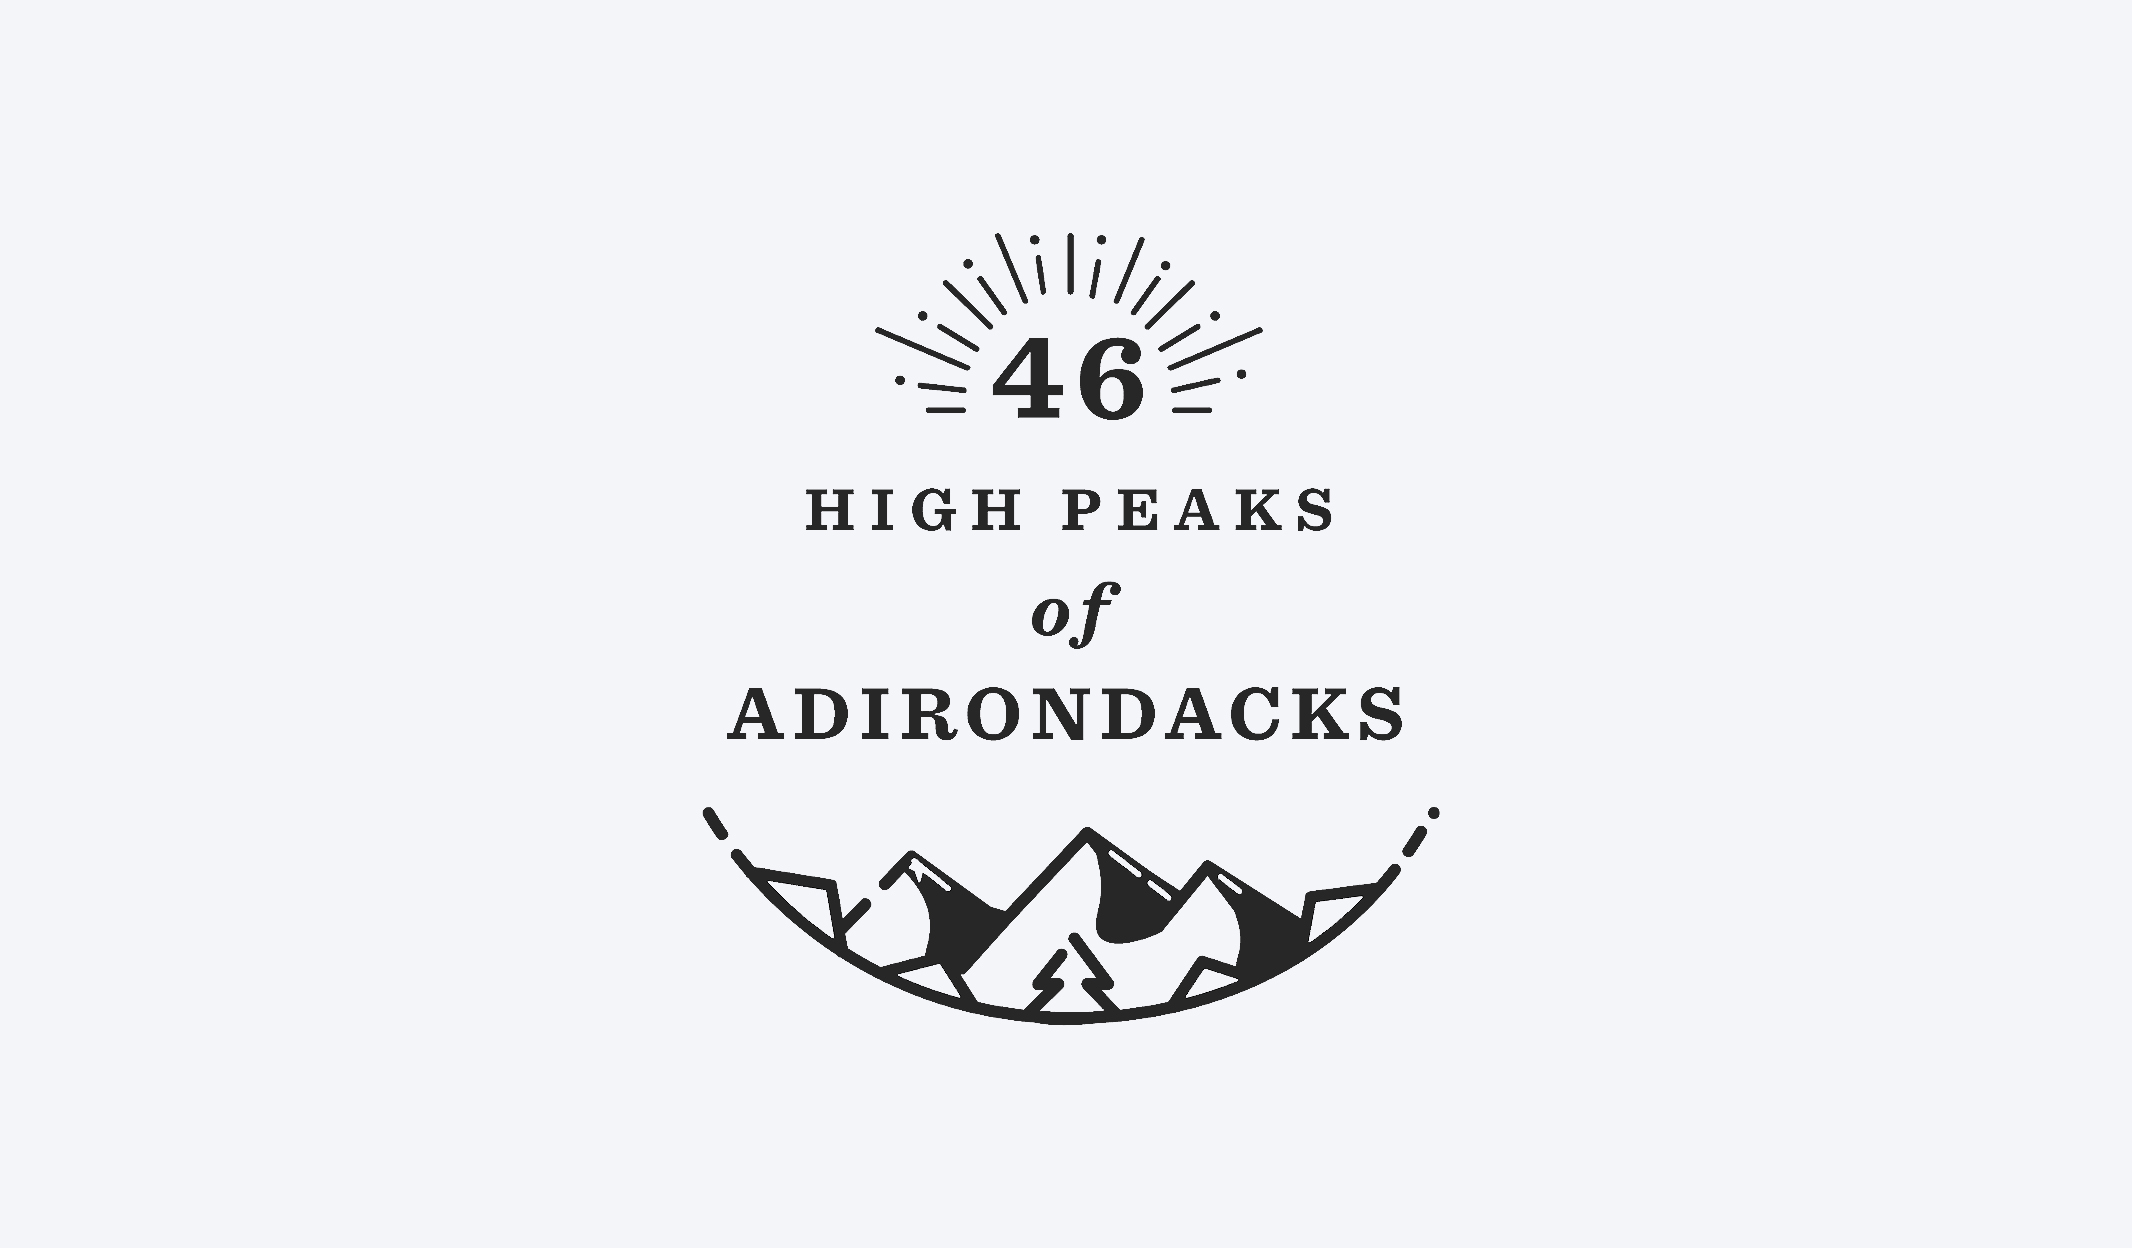 zeki-michael-adirondacks-ny-full-circle-high-peaks-46-supply-co-adirondacks-detail